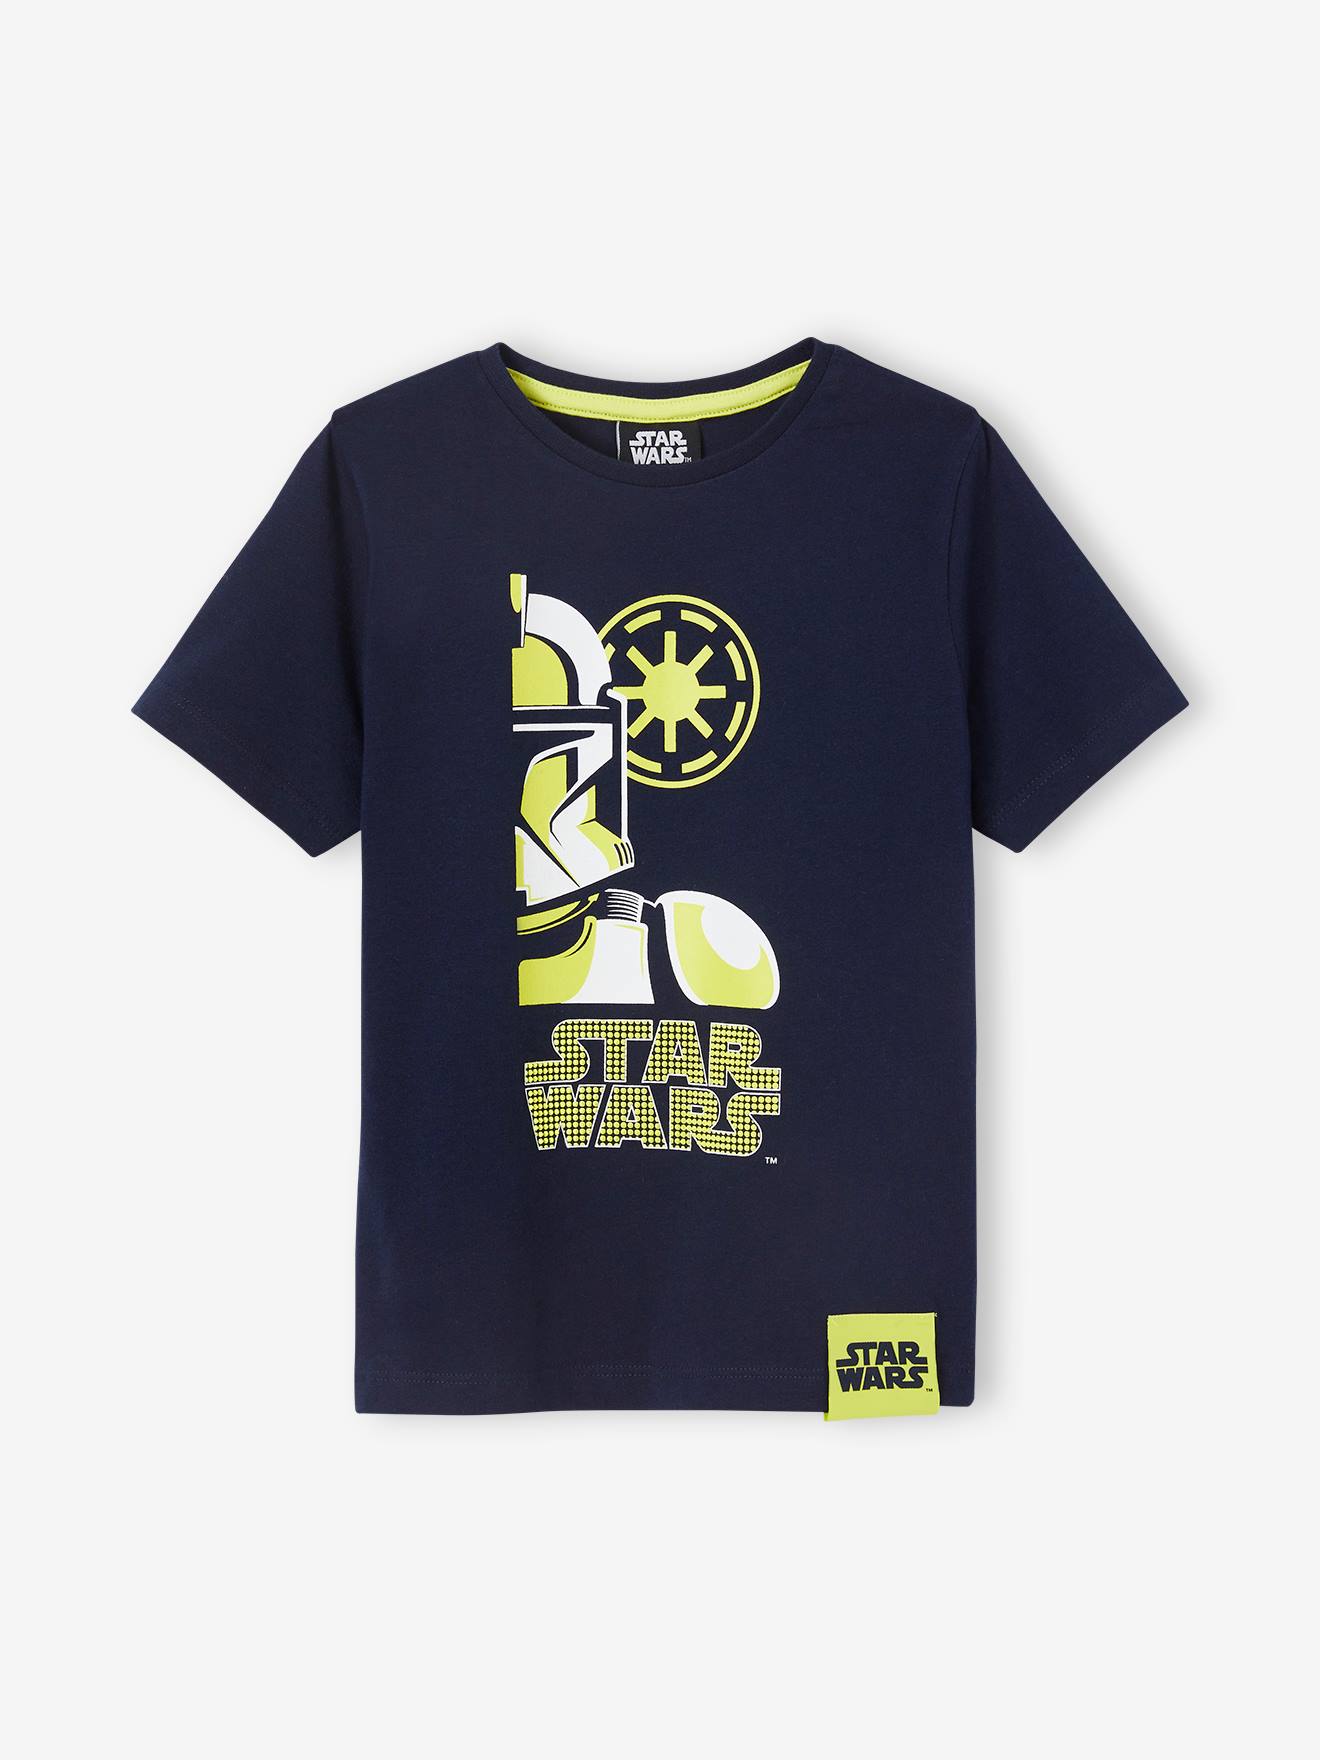 Star Wars(r) T-Shirt for Boys navy blue